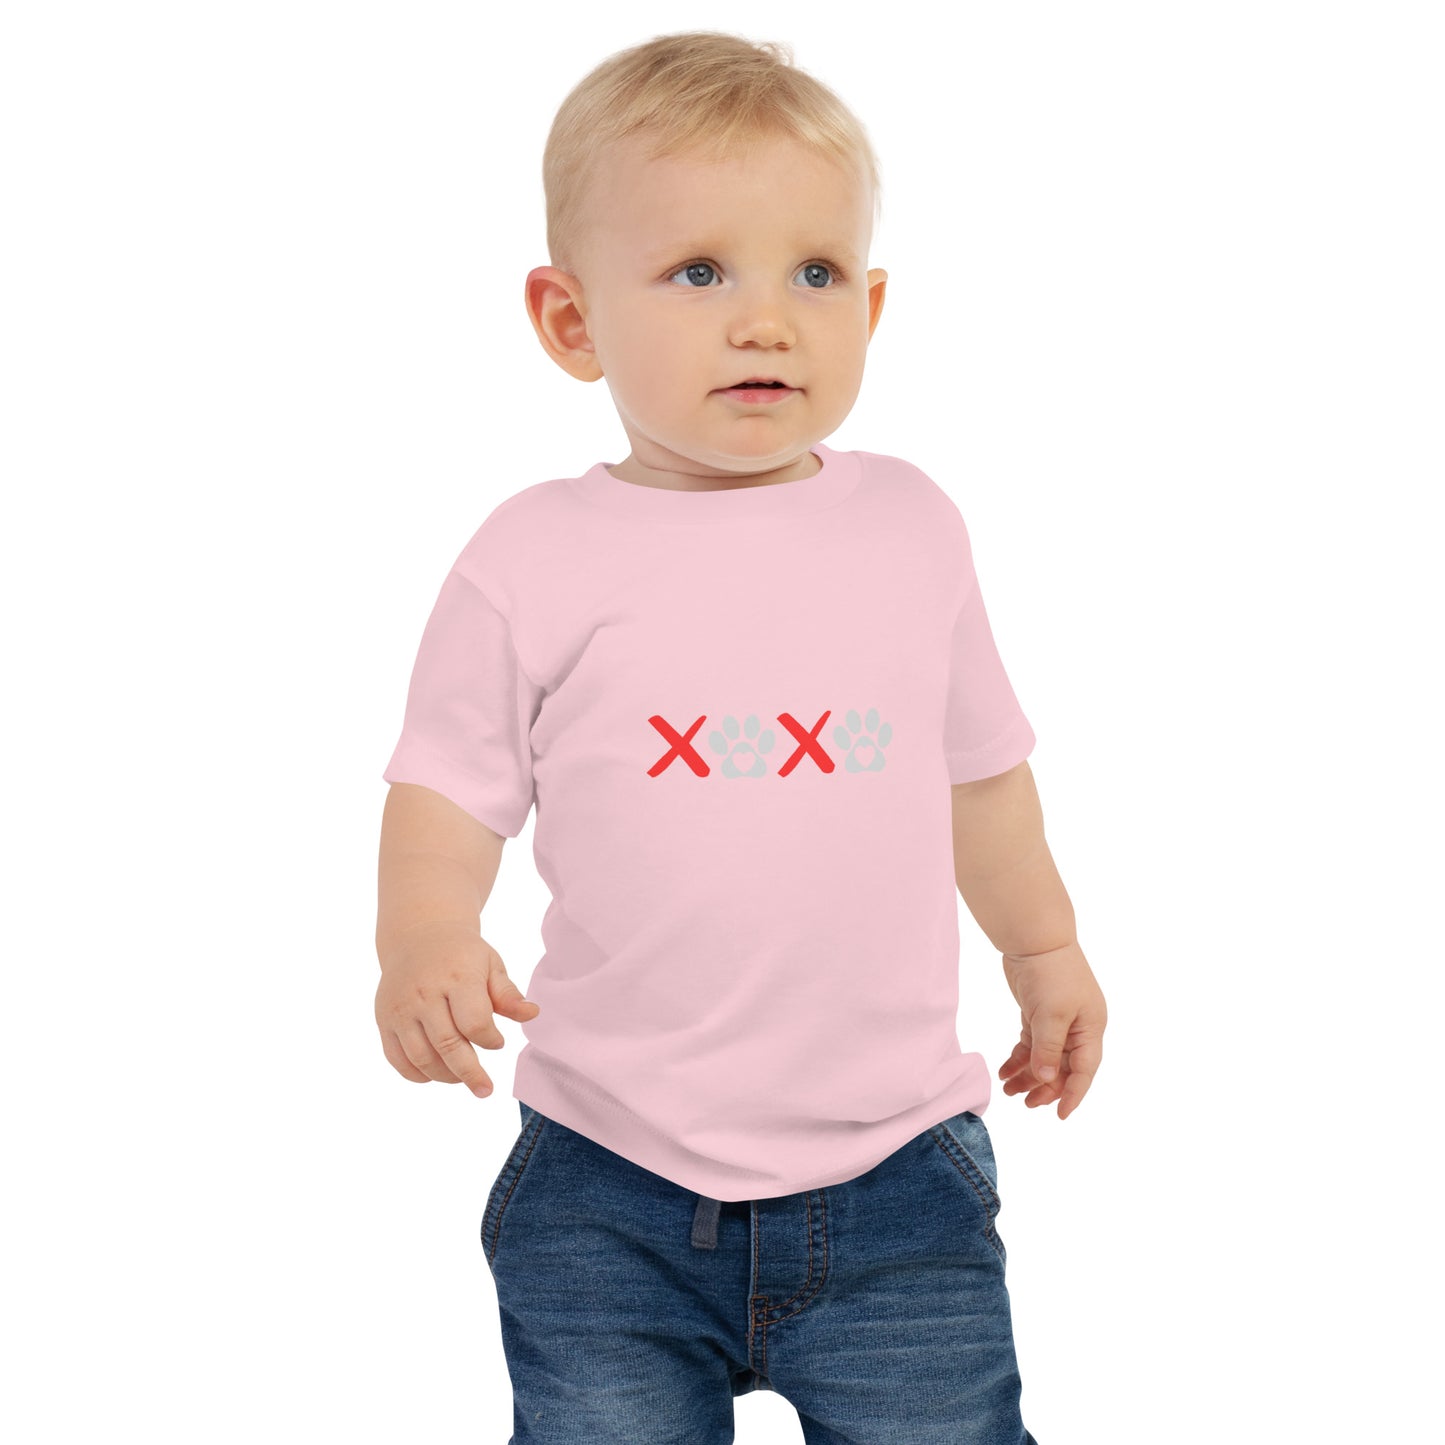 Unleashed Life XOXO Baby Jersey Short Sleeve Tee